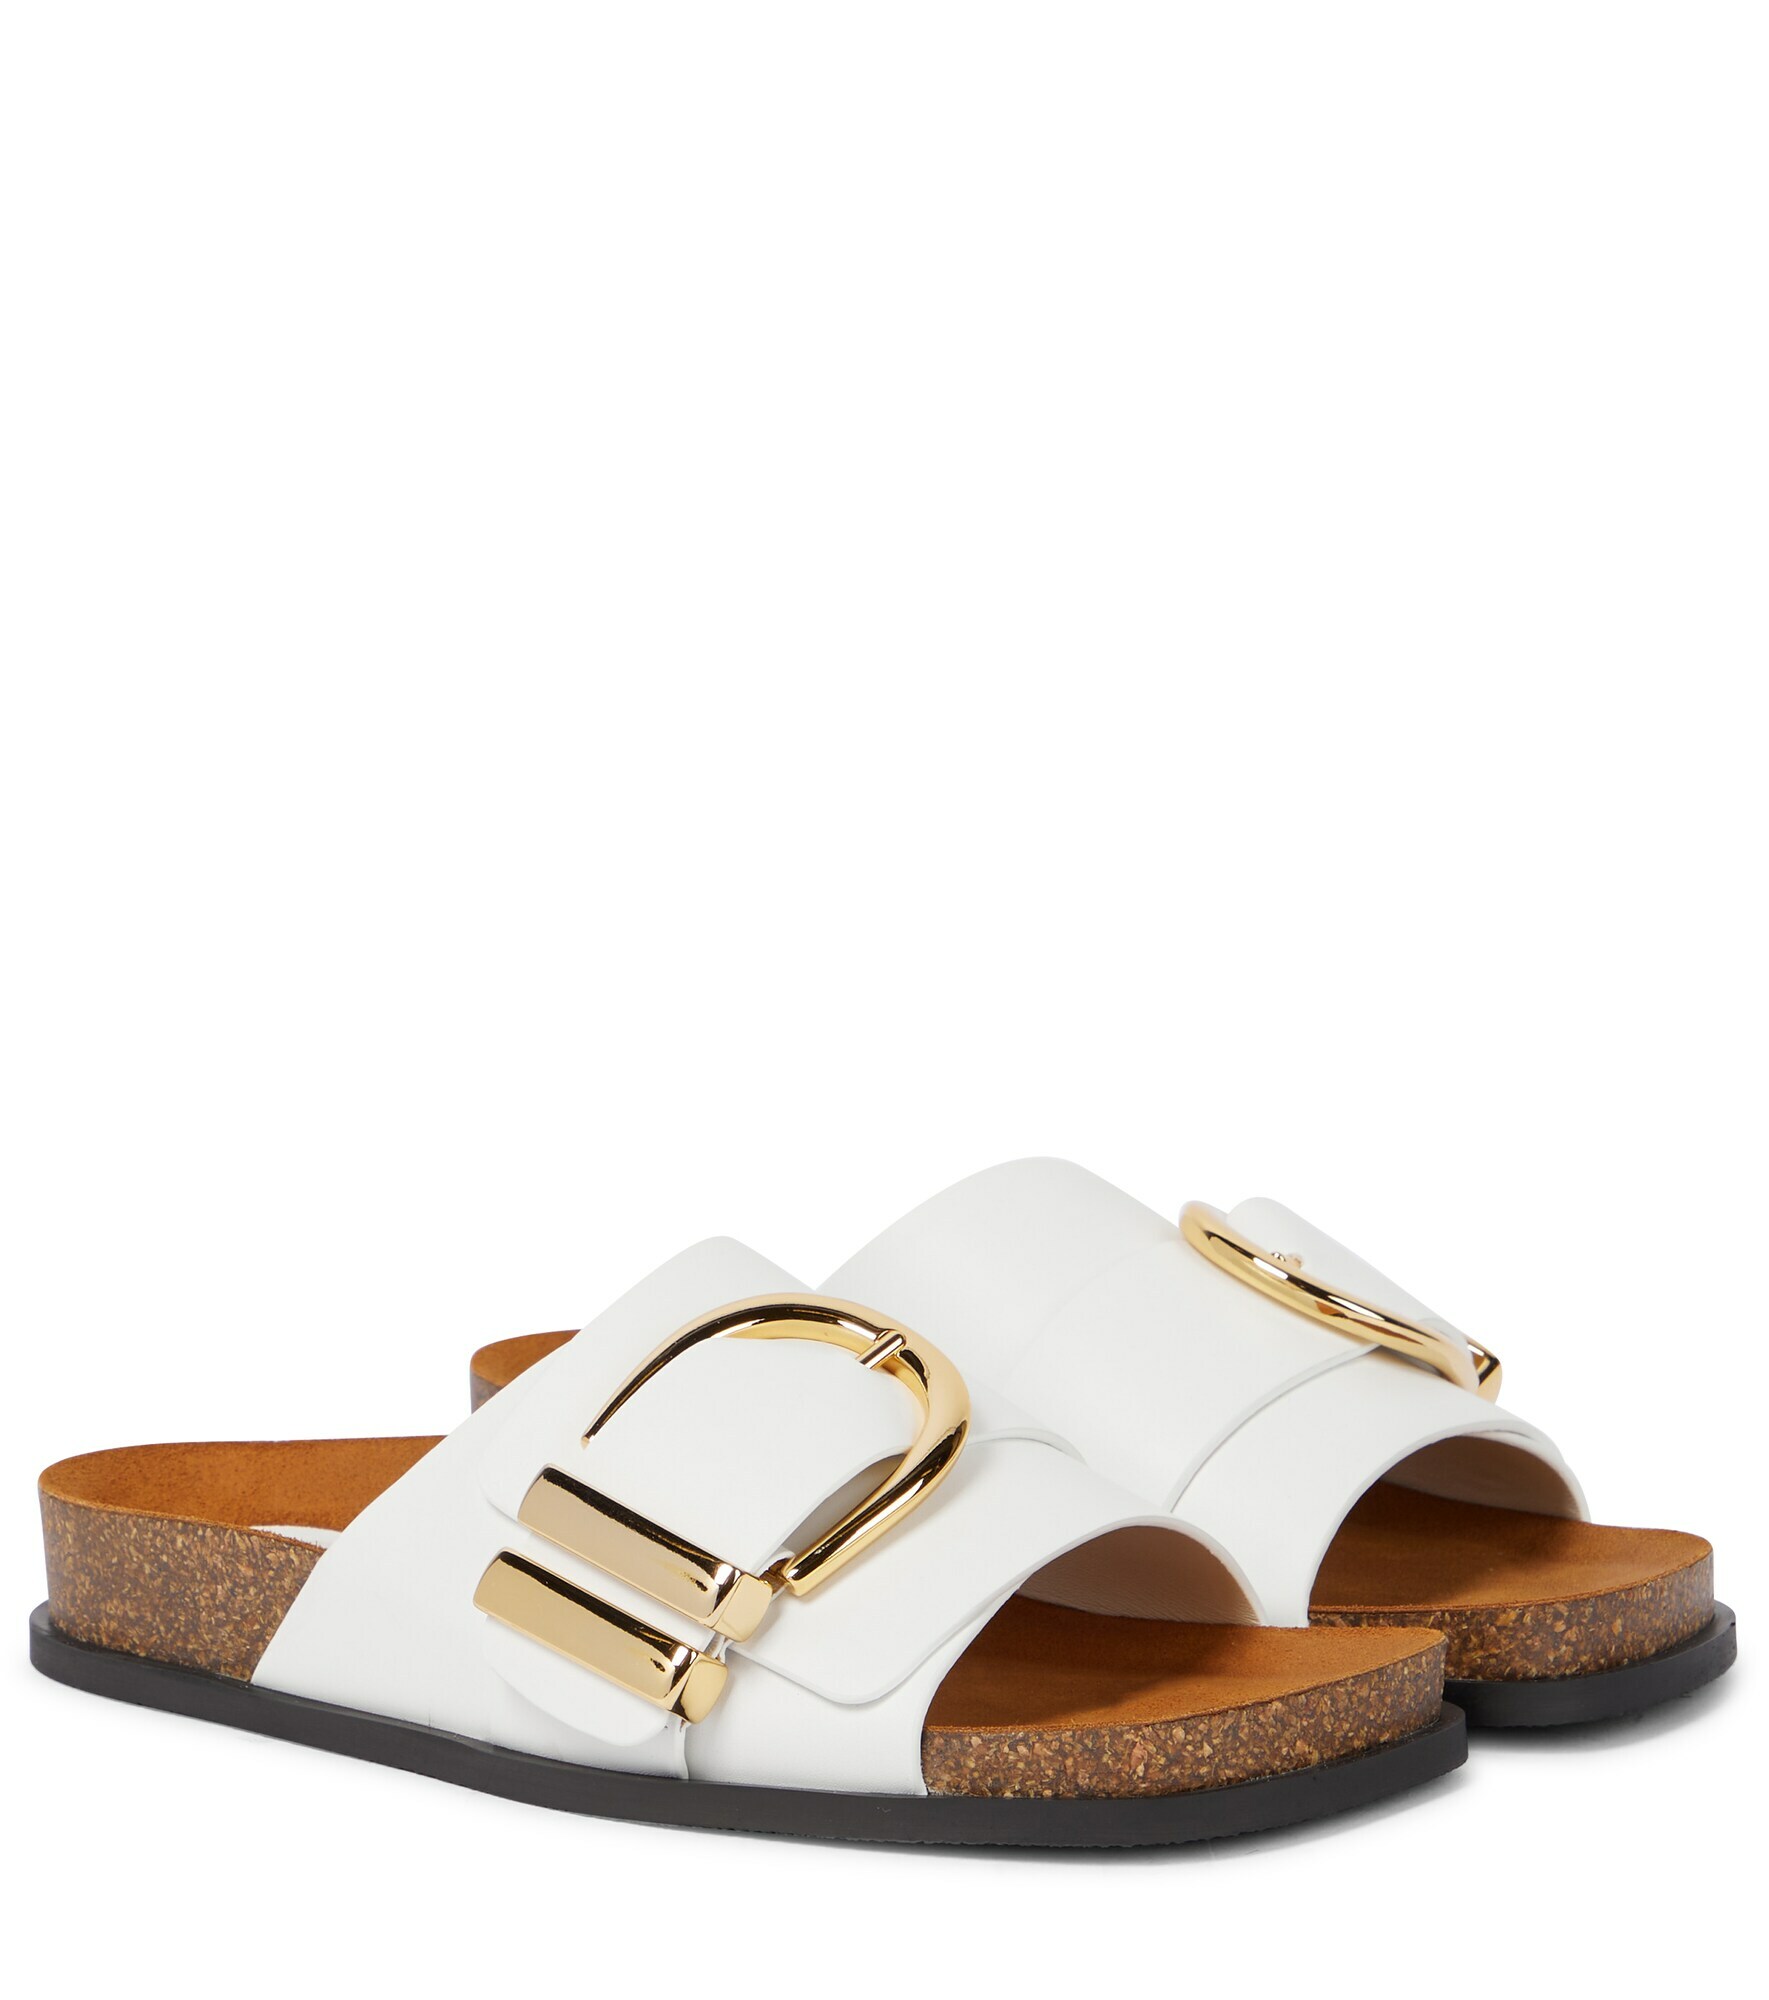 Khaite - Thompson leather sandals Khaite